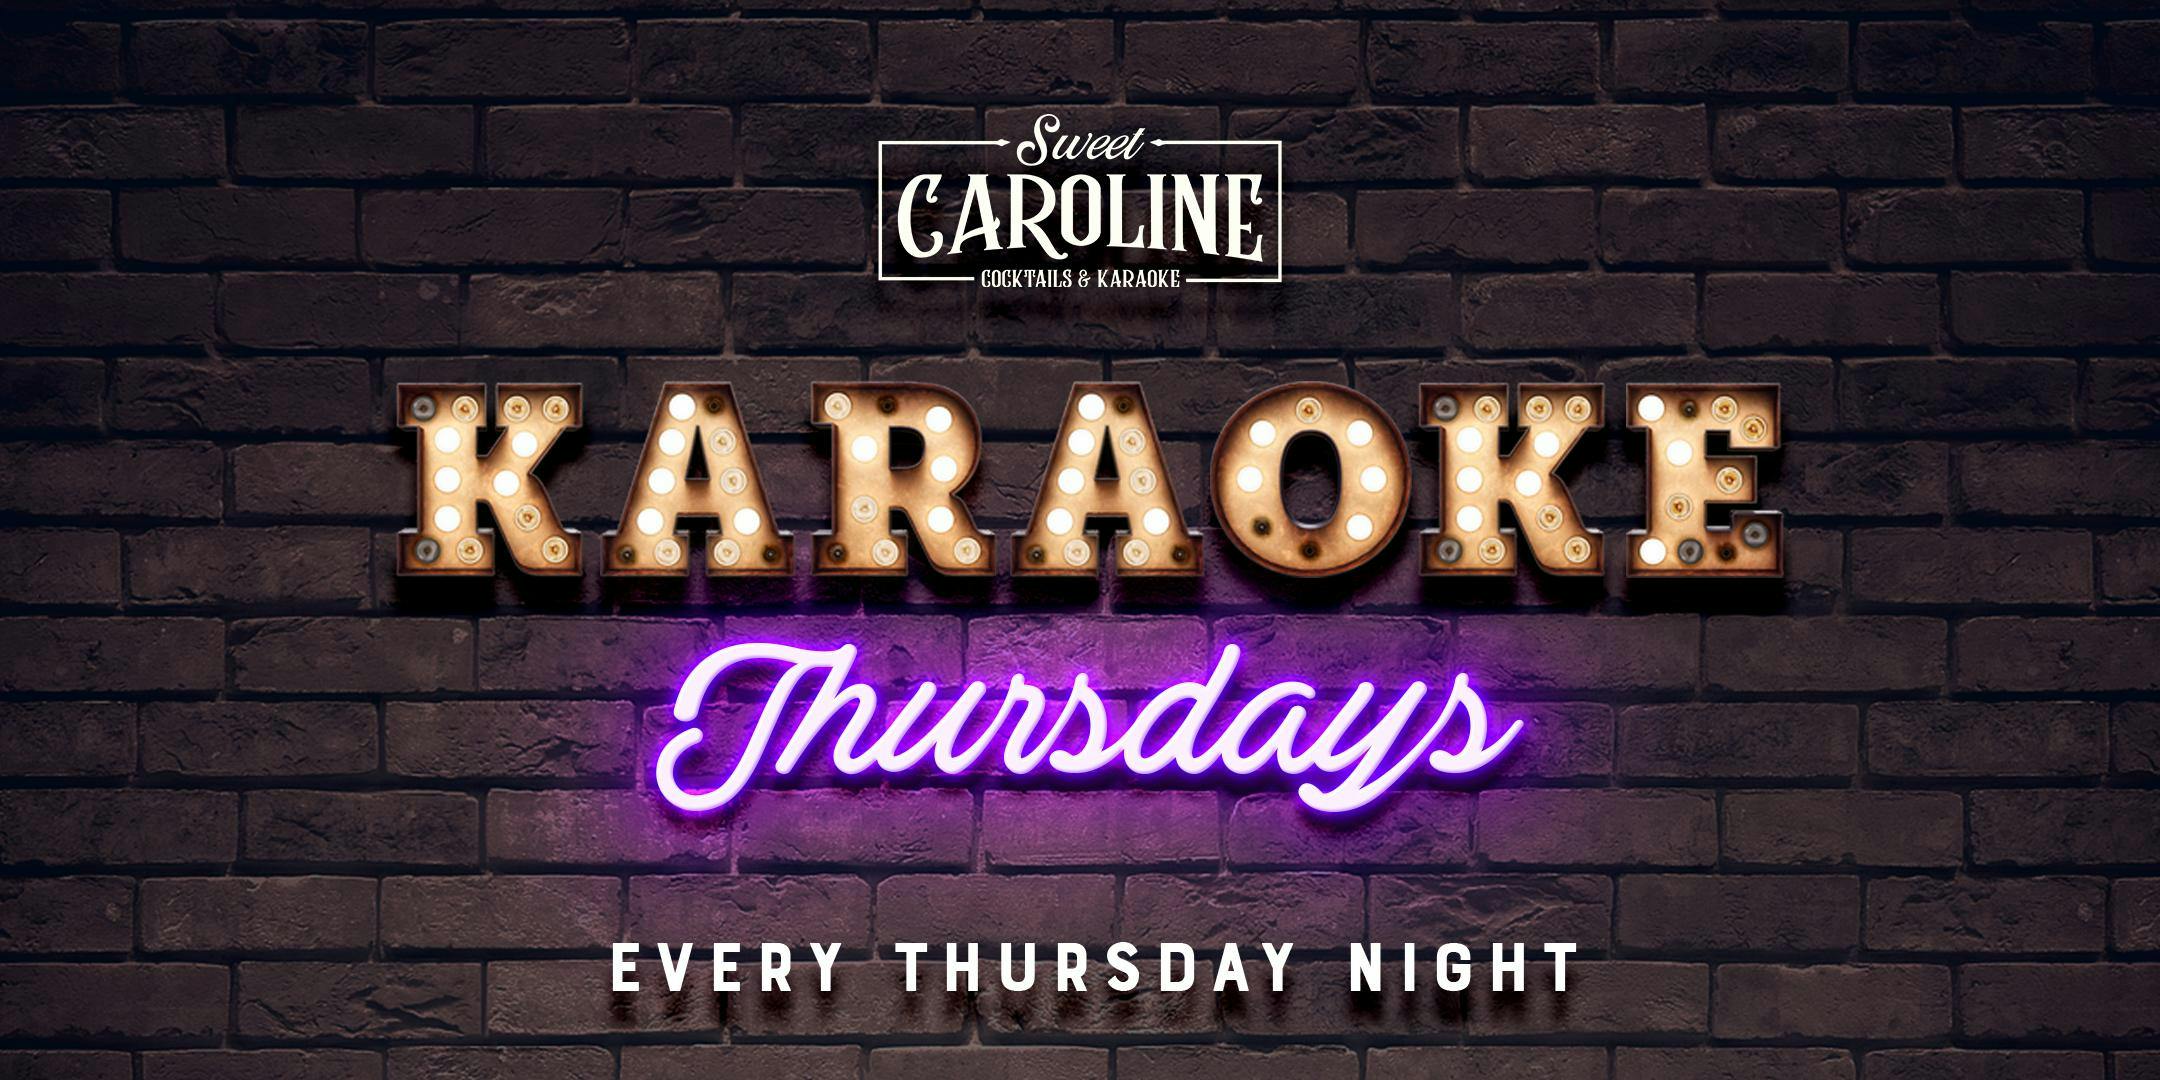 Karaoke Thursdays at Sweet Caroline - Free Drink with RSVP